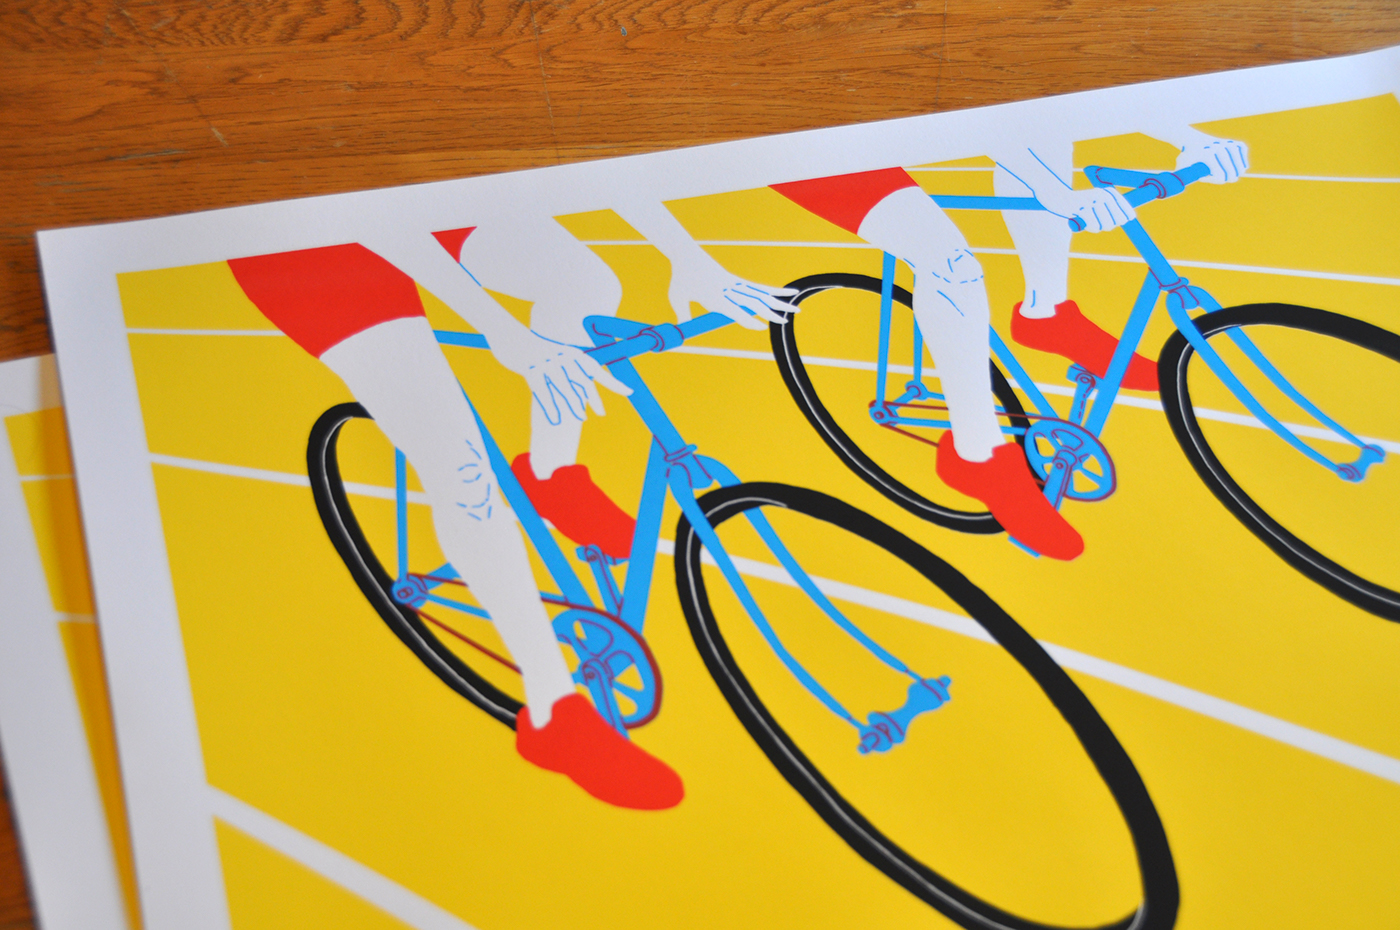 biking Art Crank Bicycle Bike screen print poster fixed gear Racing riding Primary colors